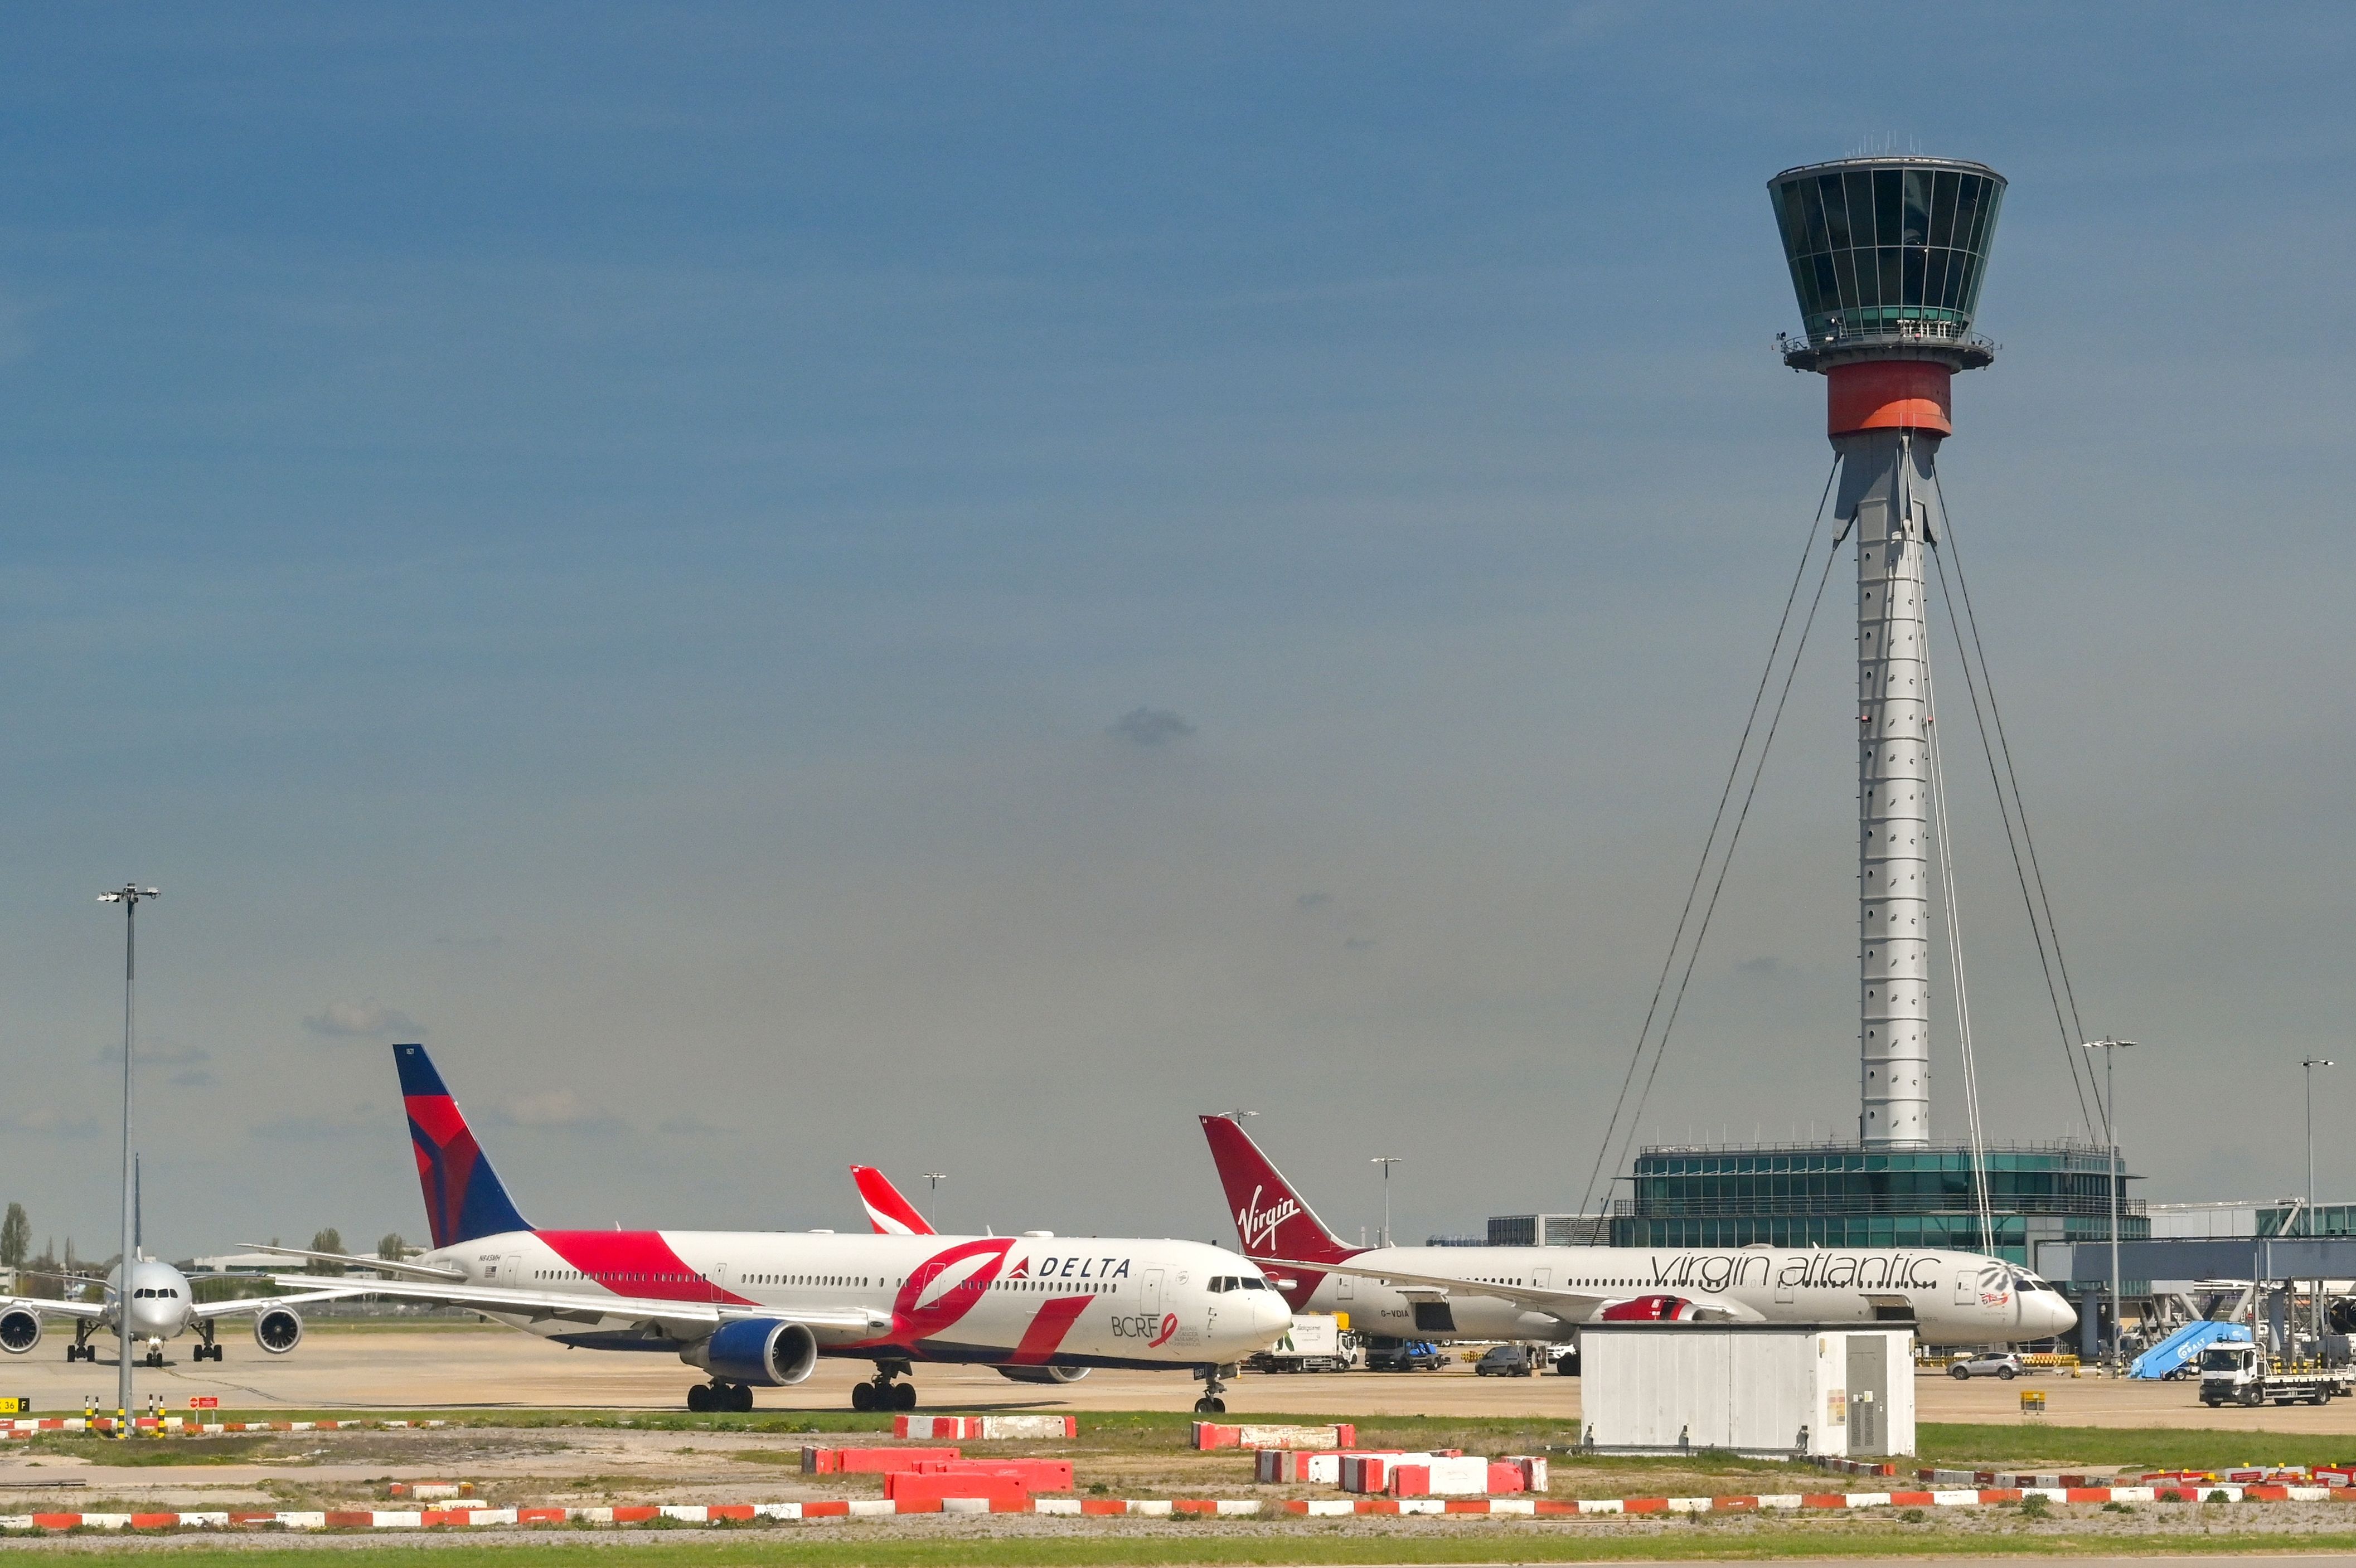 Virgin Atlantic and Delta Air Lines planes at London Heathrow Airport LHR